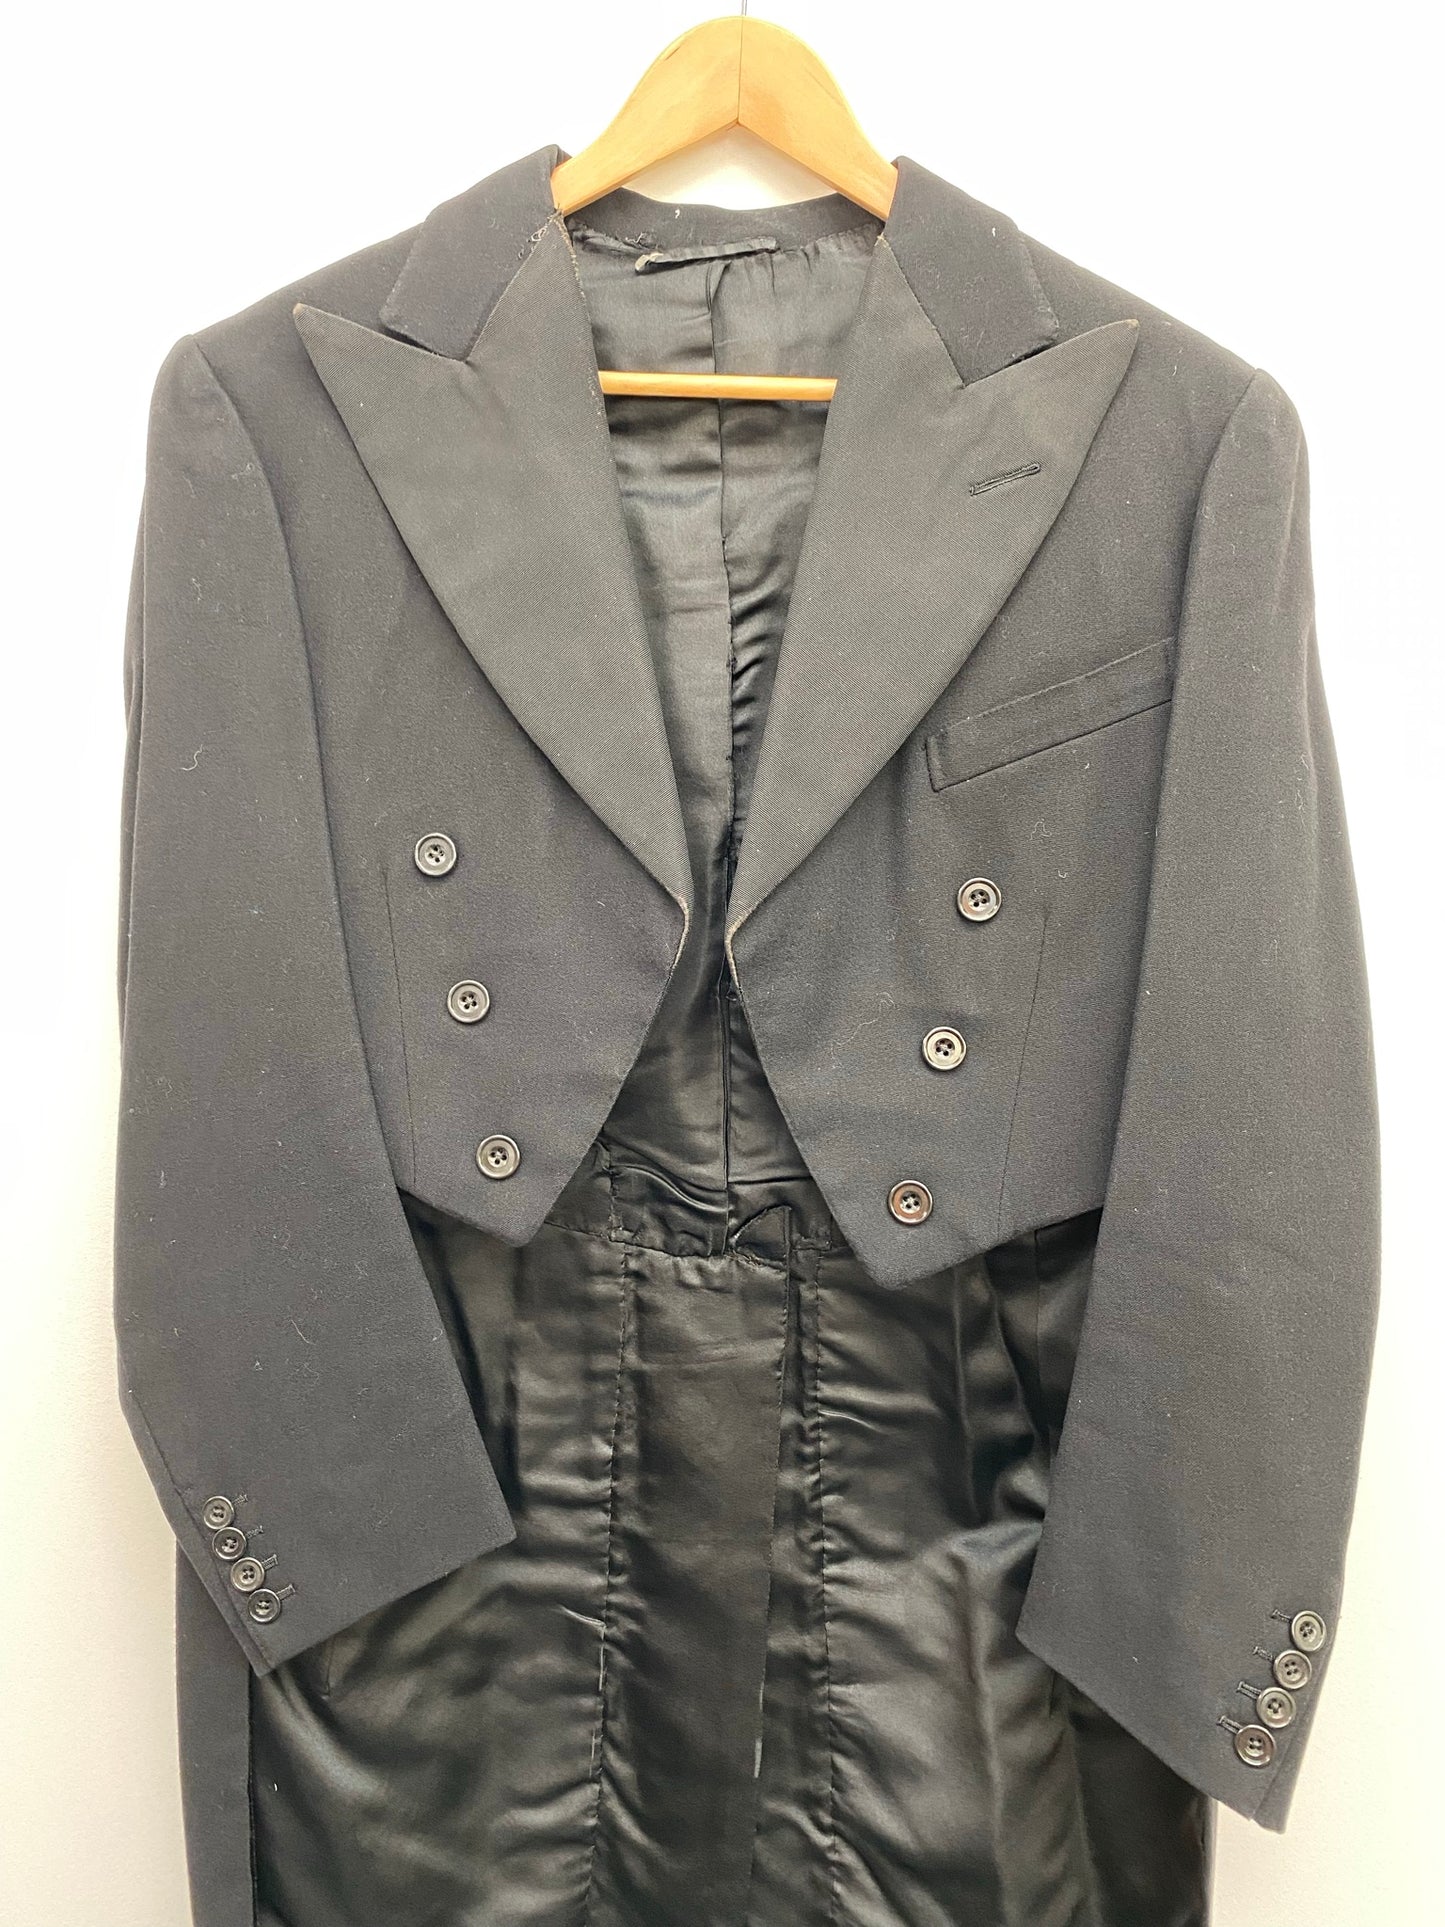 Ringmaster Black Tailcoat Small/Medium DAMAGED LINING - Ex Hire Fancy Dress Costume